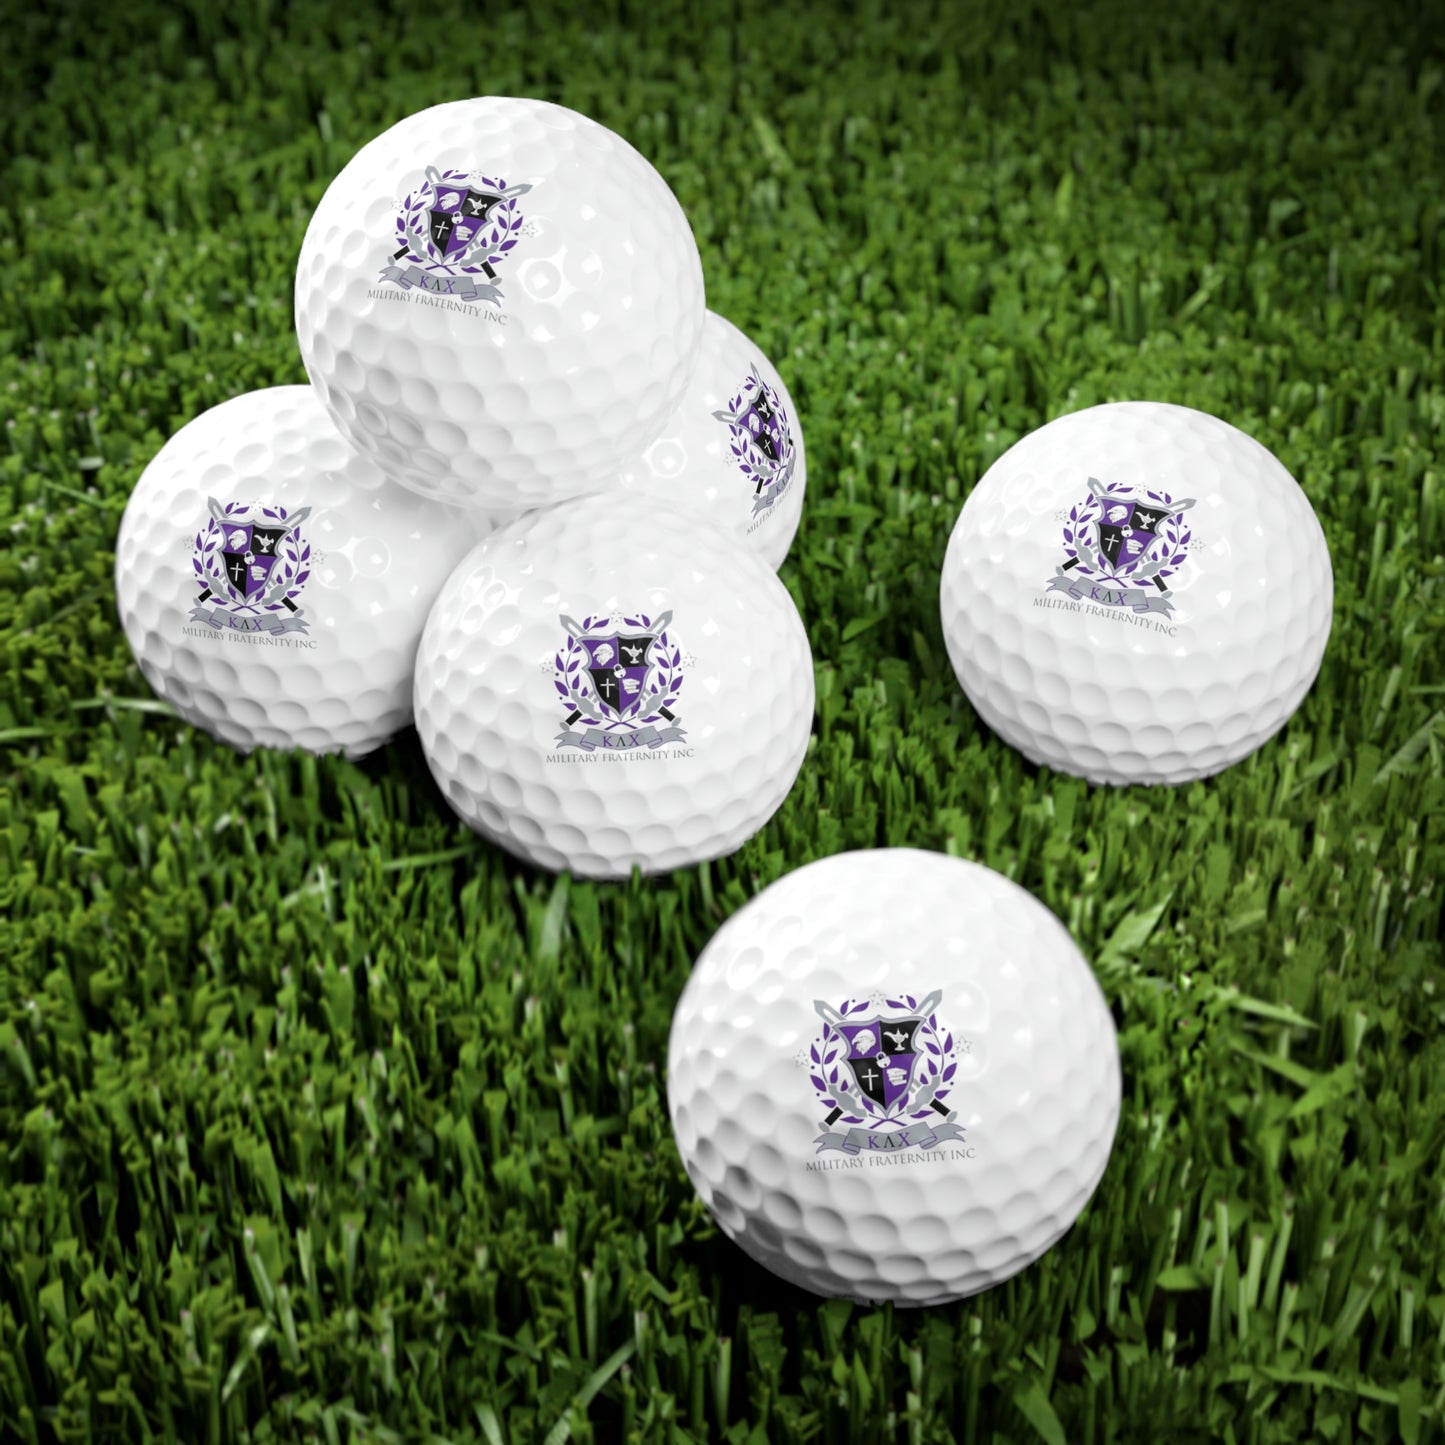 Kappa Lambda Chi (KLC) Golf Balls, 6pcs